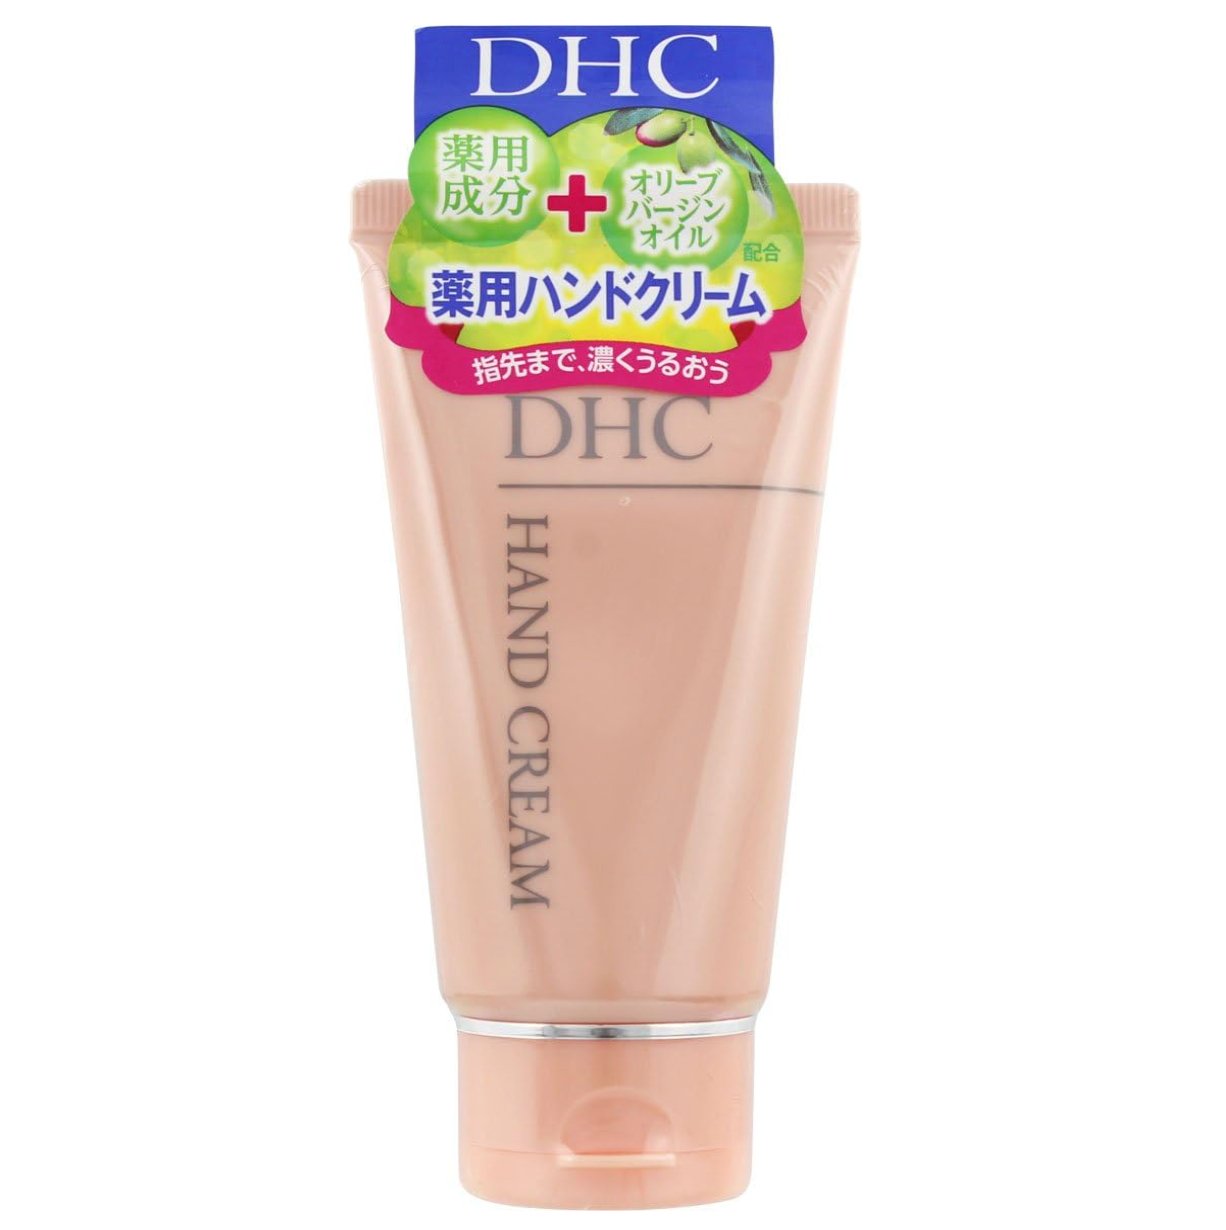 DHC Medicinal Hand Cream SS - 60g - NihonMura